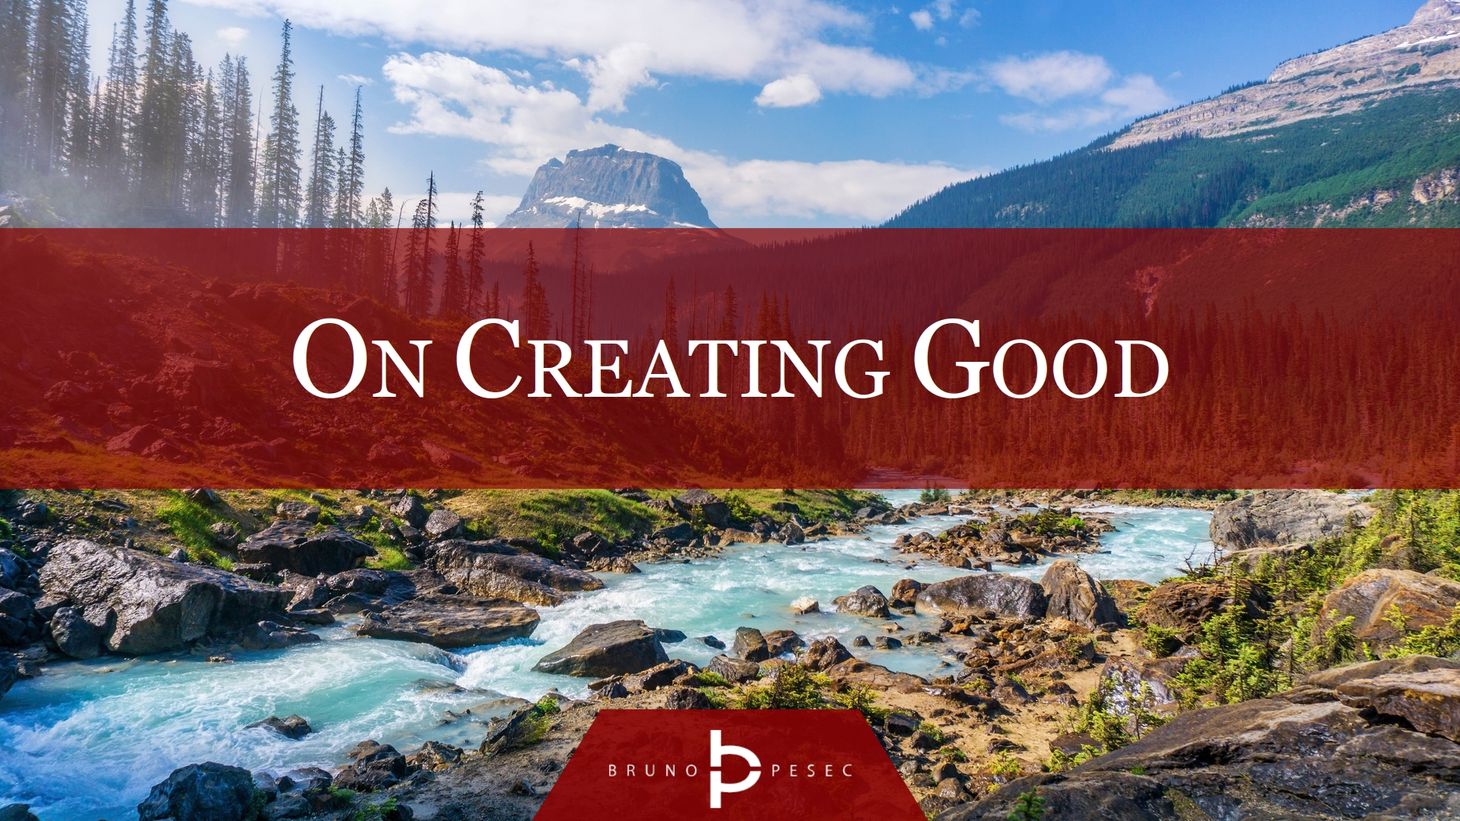 On creating good